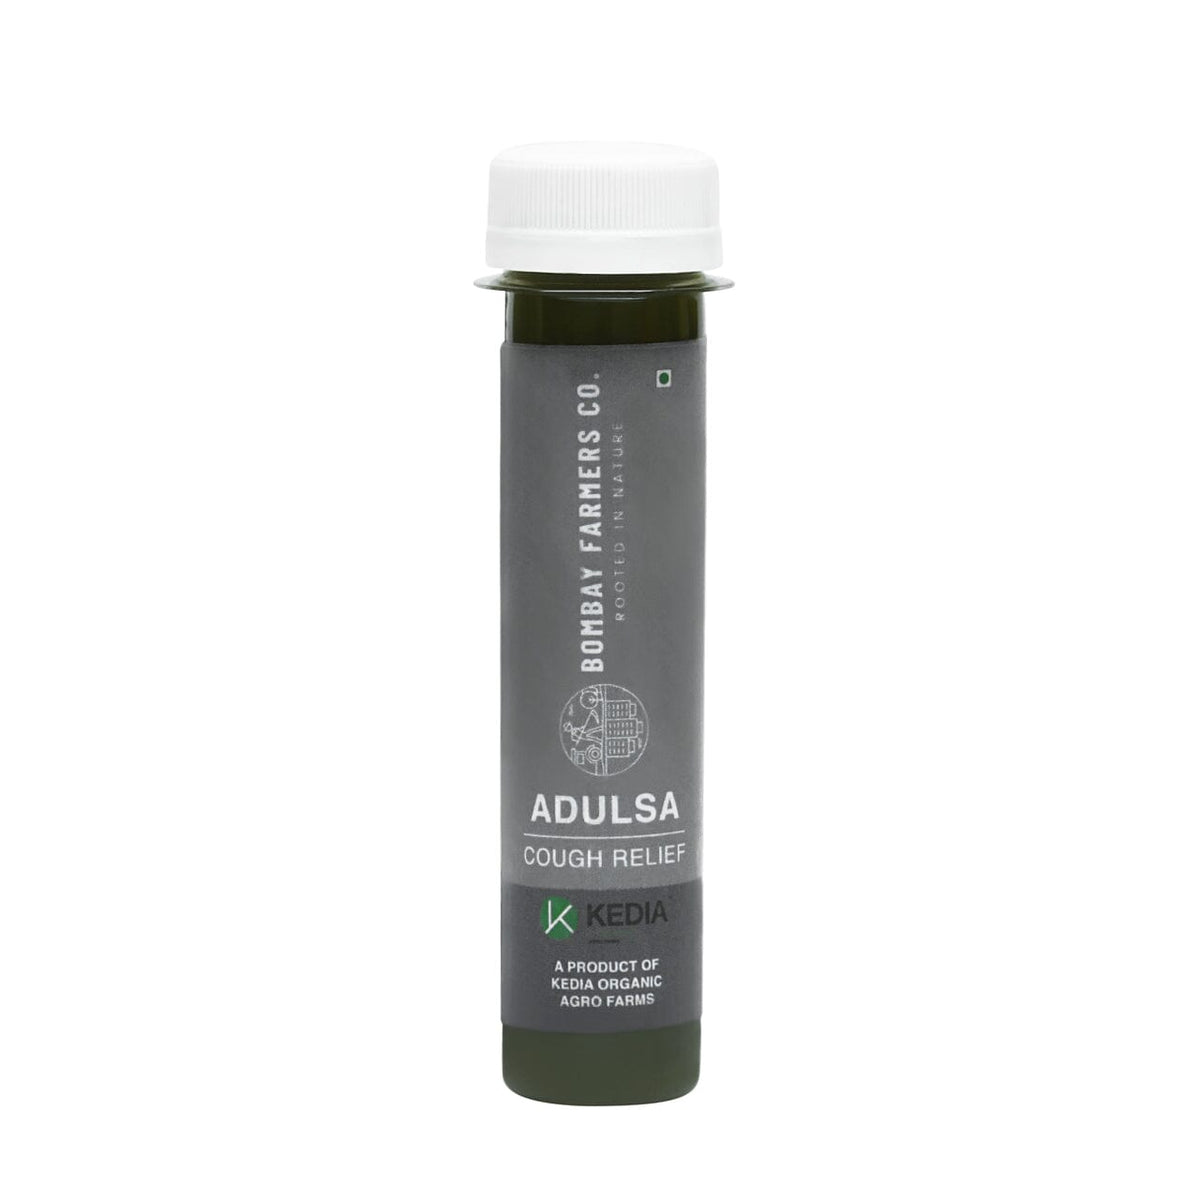 Organic Adulsa Cold Pressed Juice - 40 ML - Kedia Organic Agro Farms Wellness Shots Kedia Organic Agro Farms 